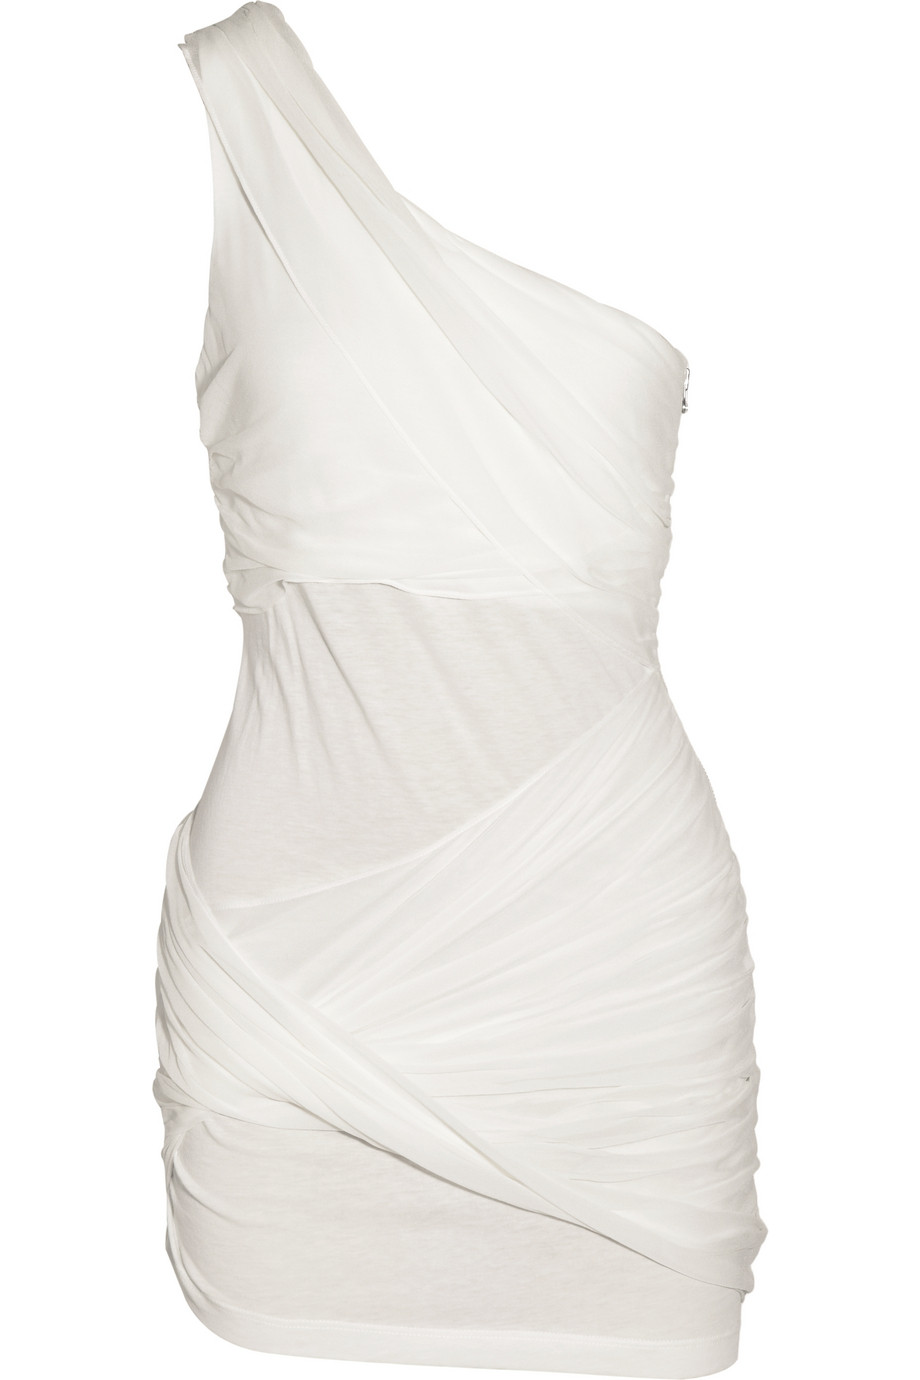 Lyst - Alice + olivia Asymmetric Silk-paneled Dress in White